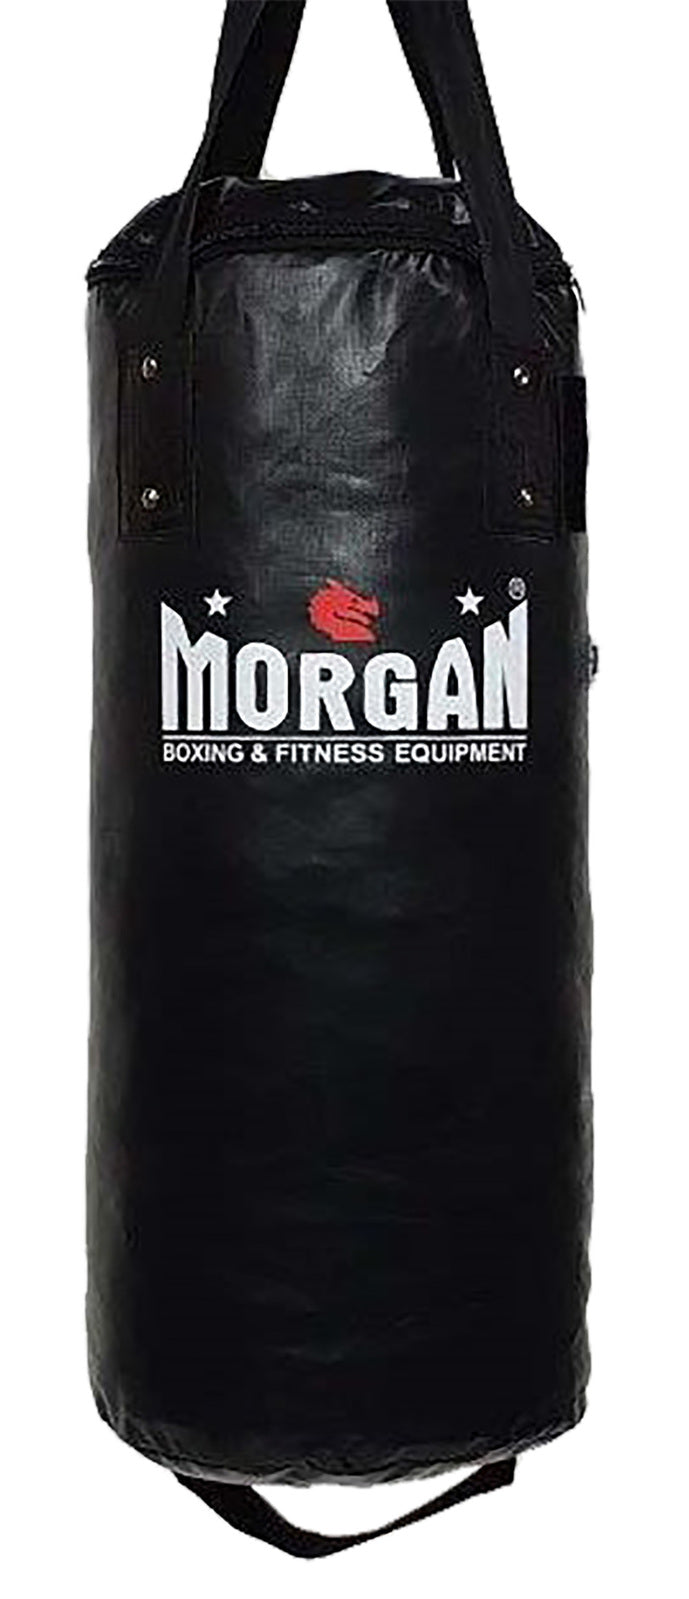 Morgan Small Nugget Punch Bag - Fitness Hero Brand new